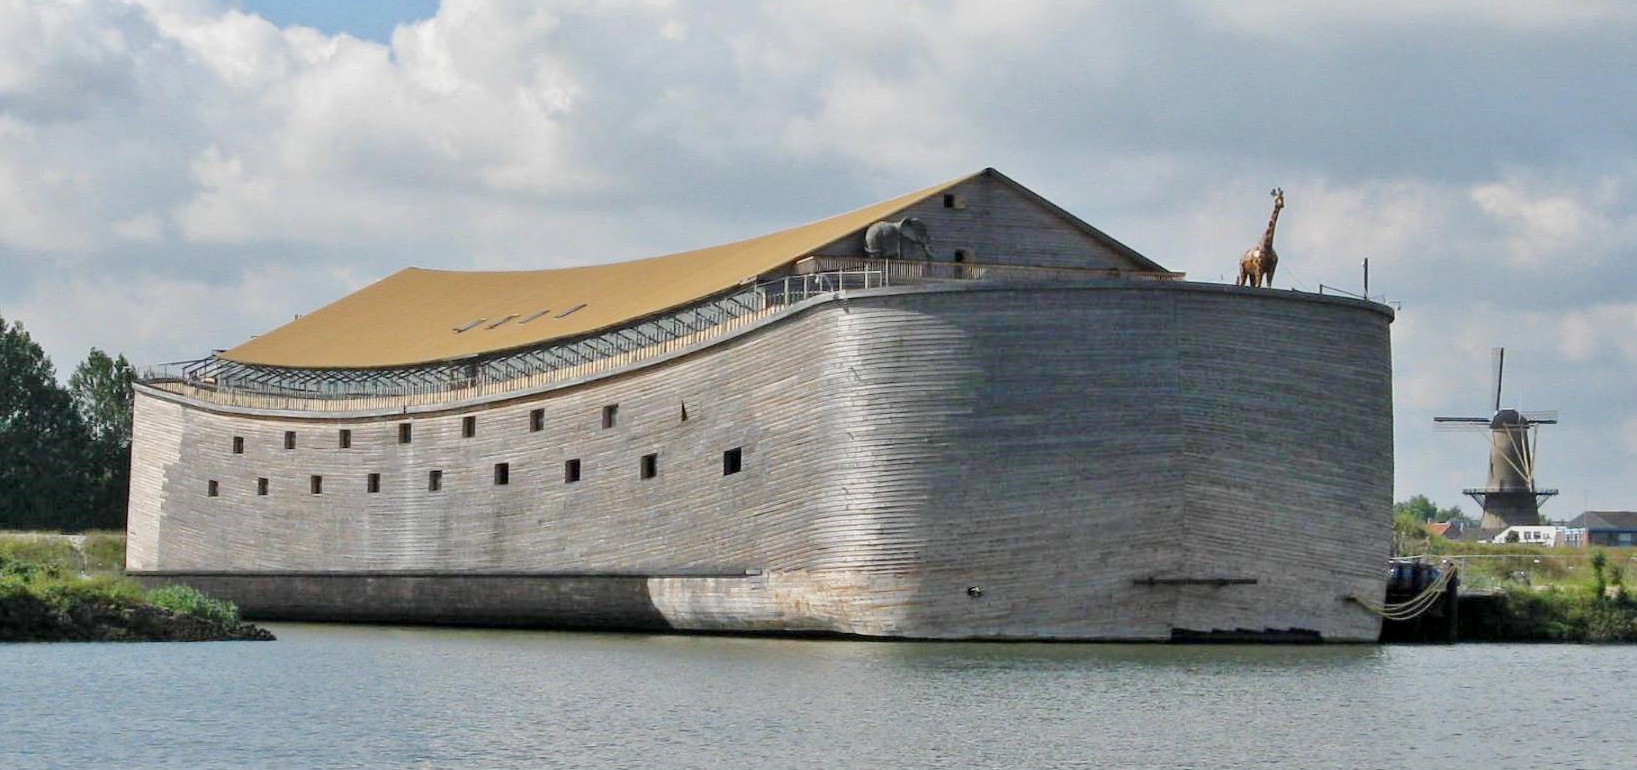 ship modeled after the biblical description of Noah's Ark, "Johan's 